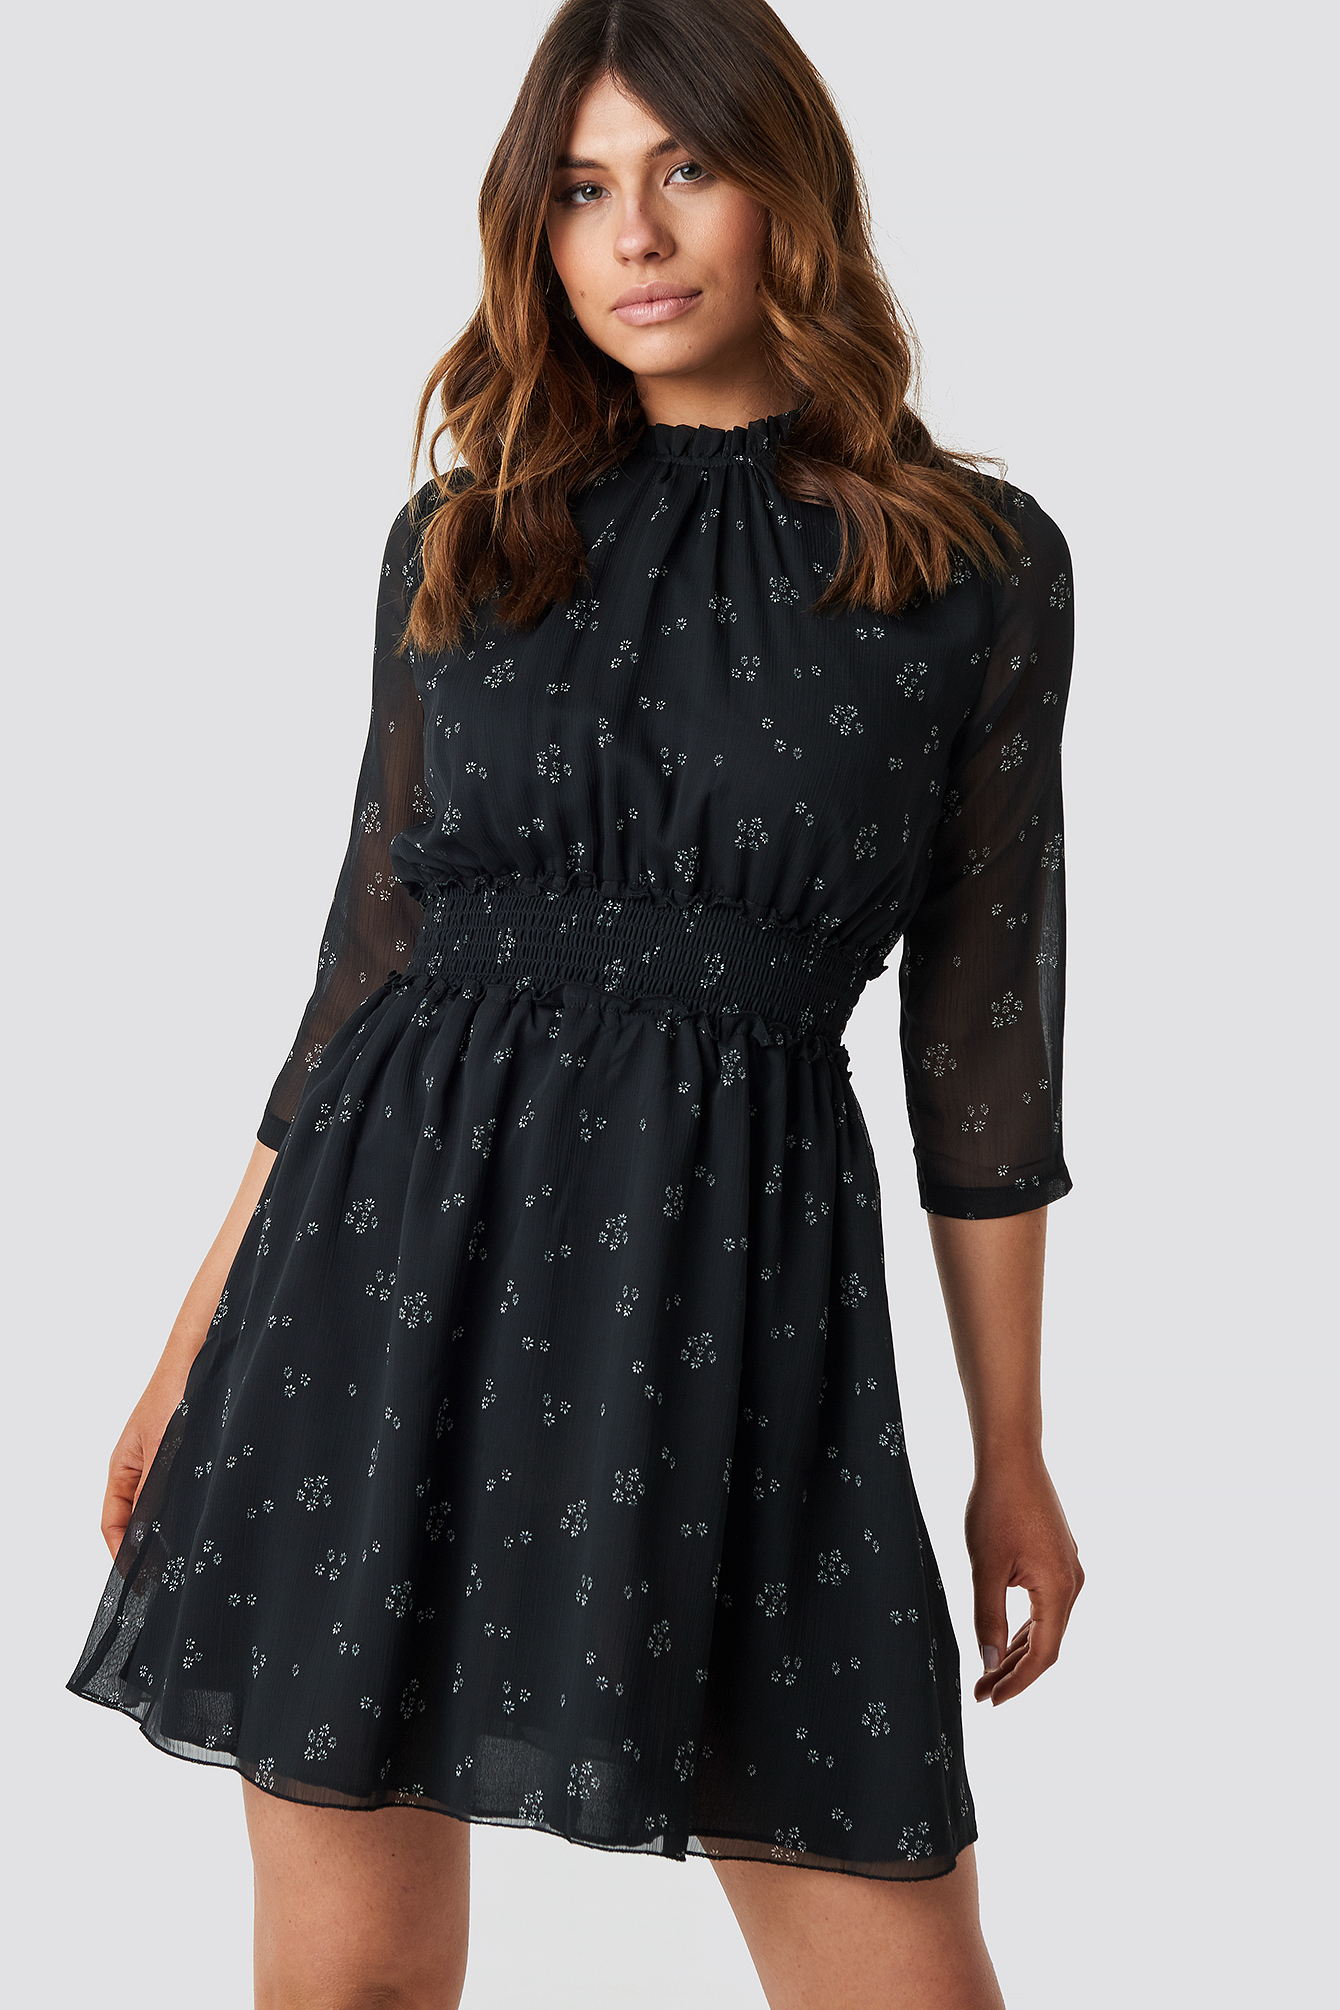 black patterned midi dress